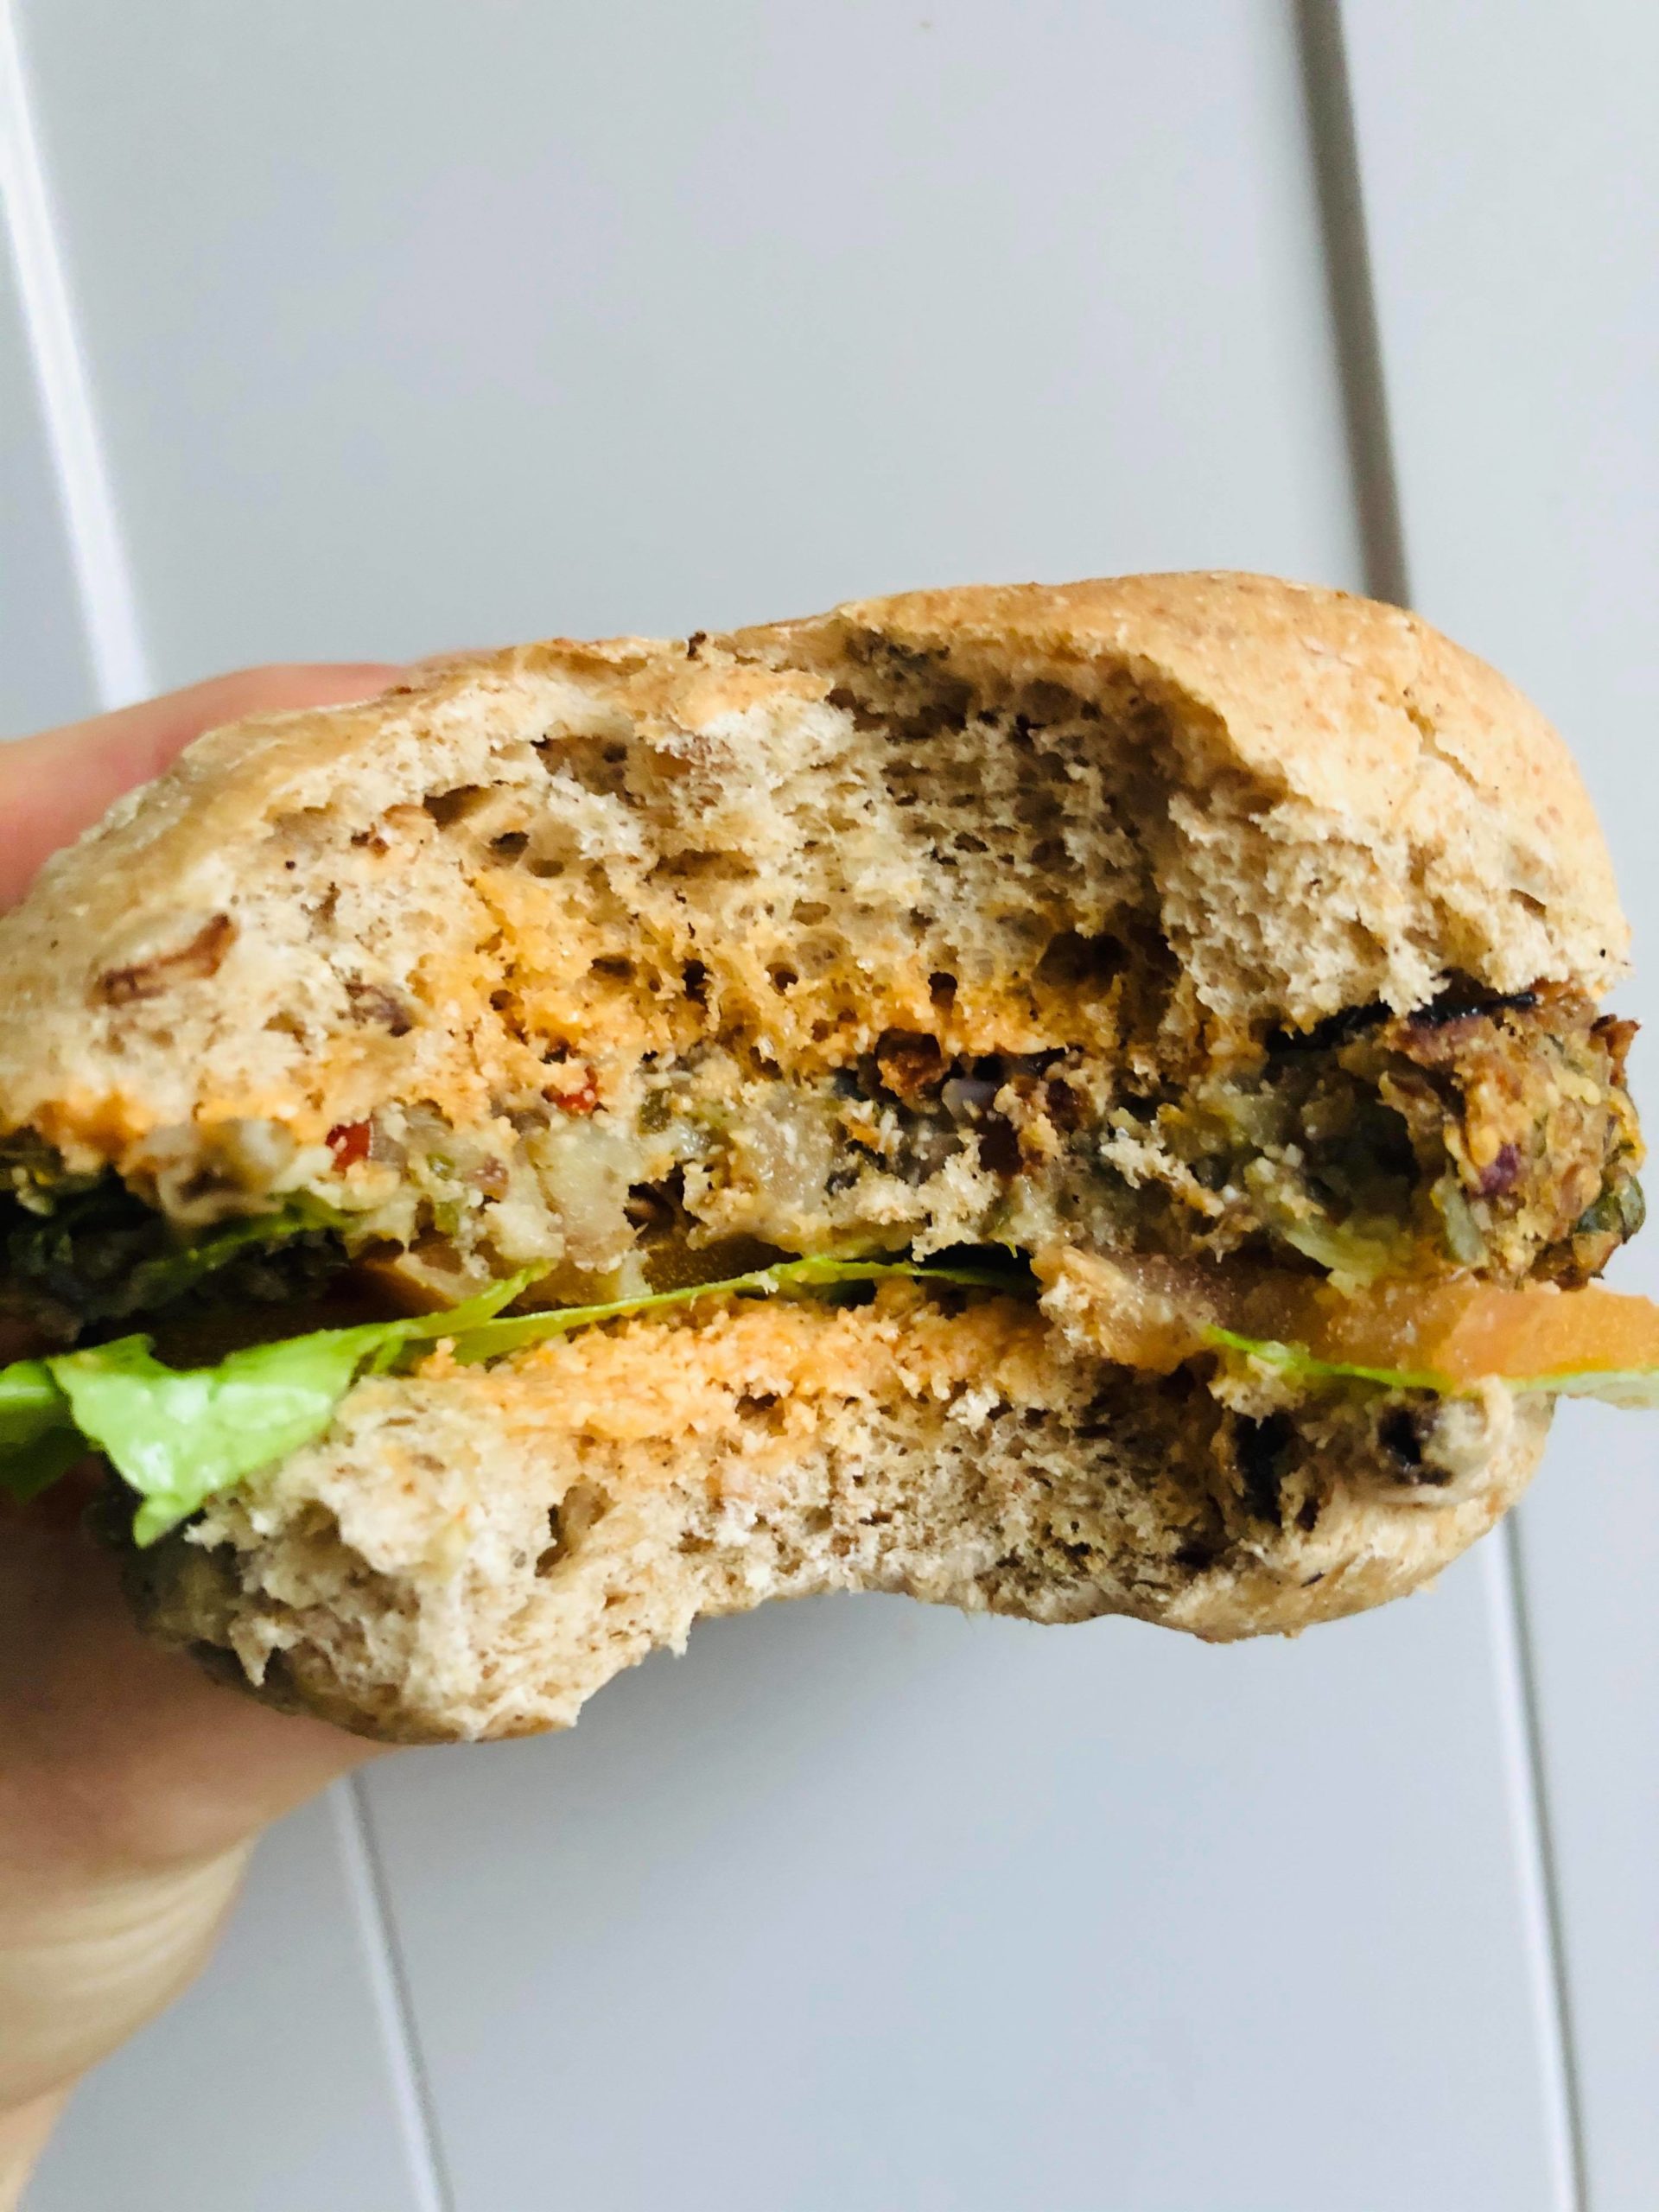 Easy Healthy High-Protein Vegan Lentil Burgers - Vegevega